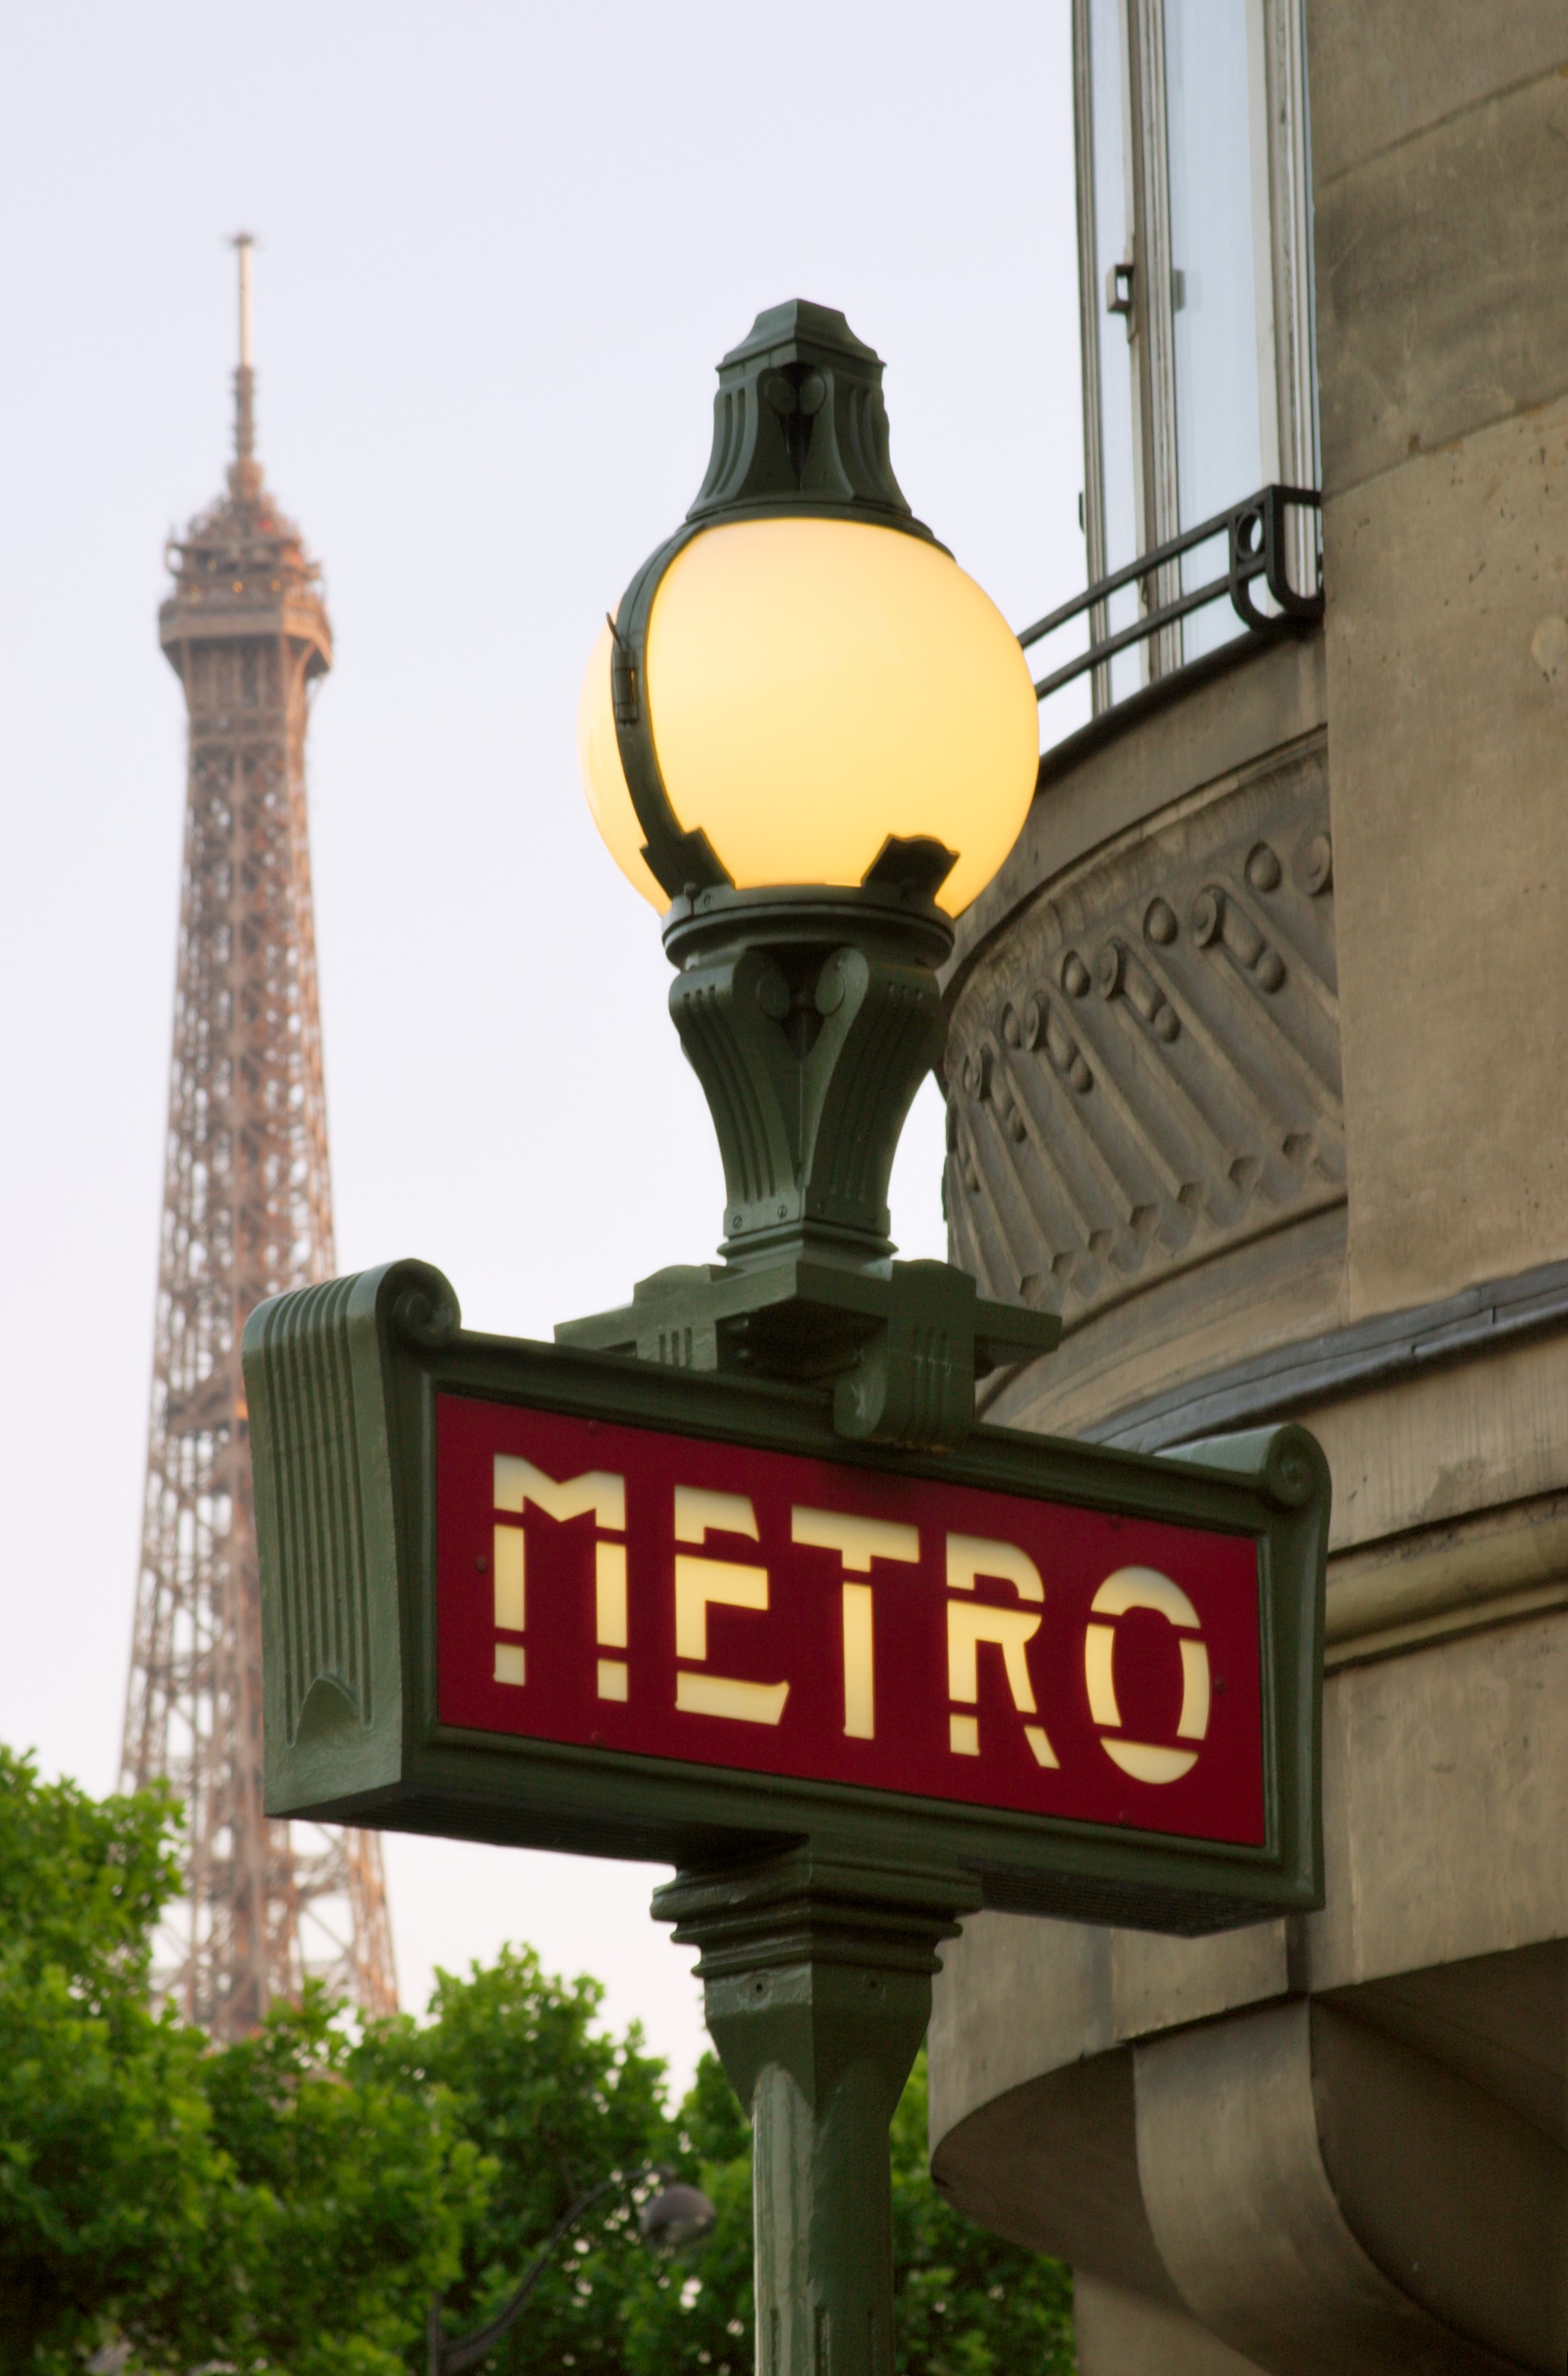 File:Paris Metro sign.jpg - Wikimedia Commons